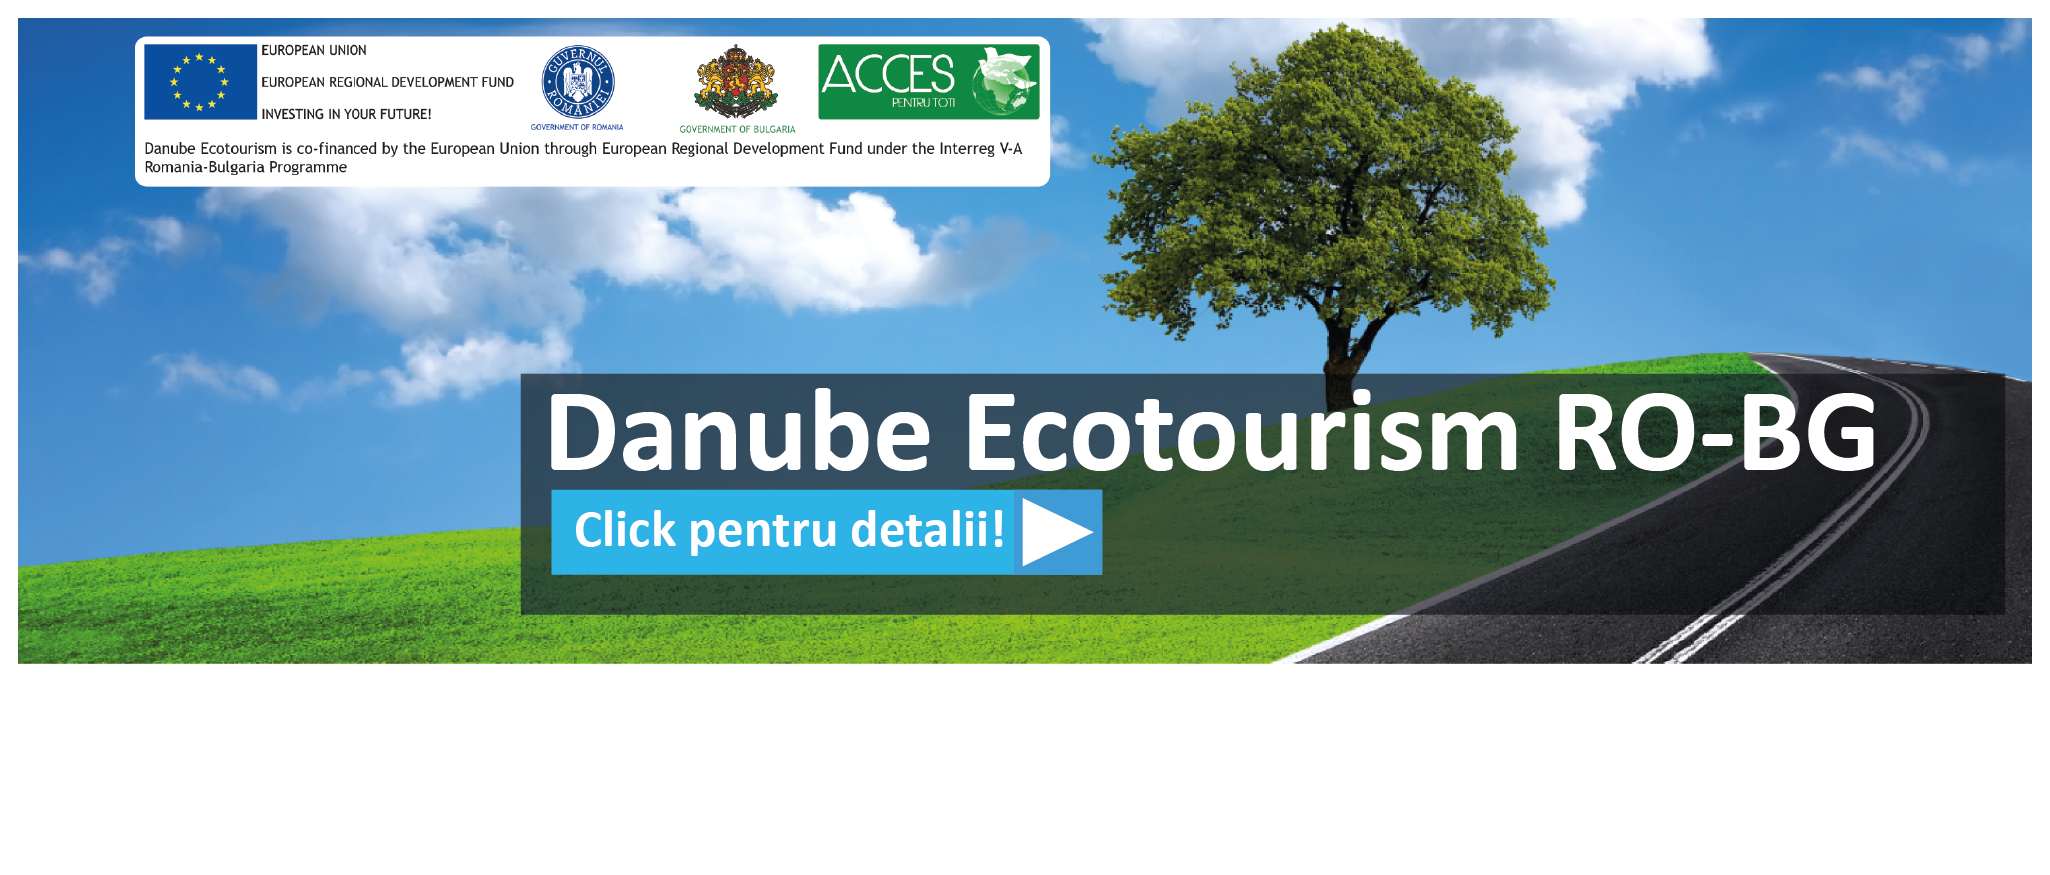 Danube Ecotourism RO-BG 